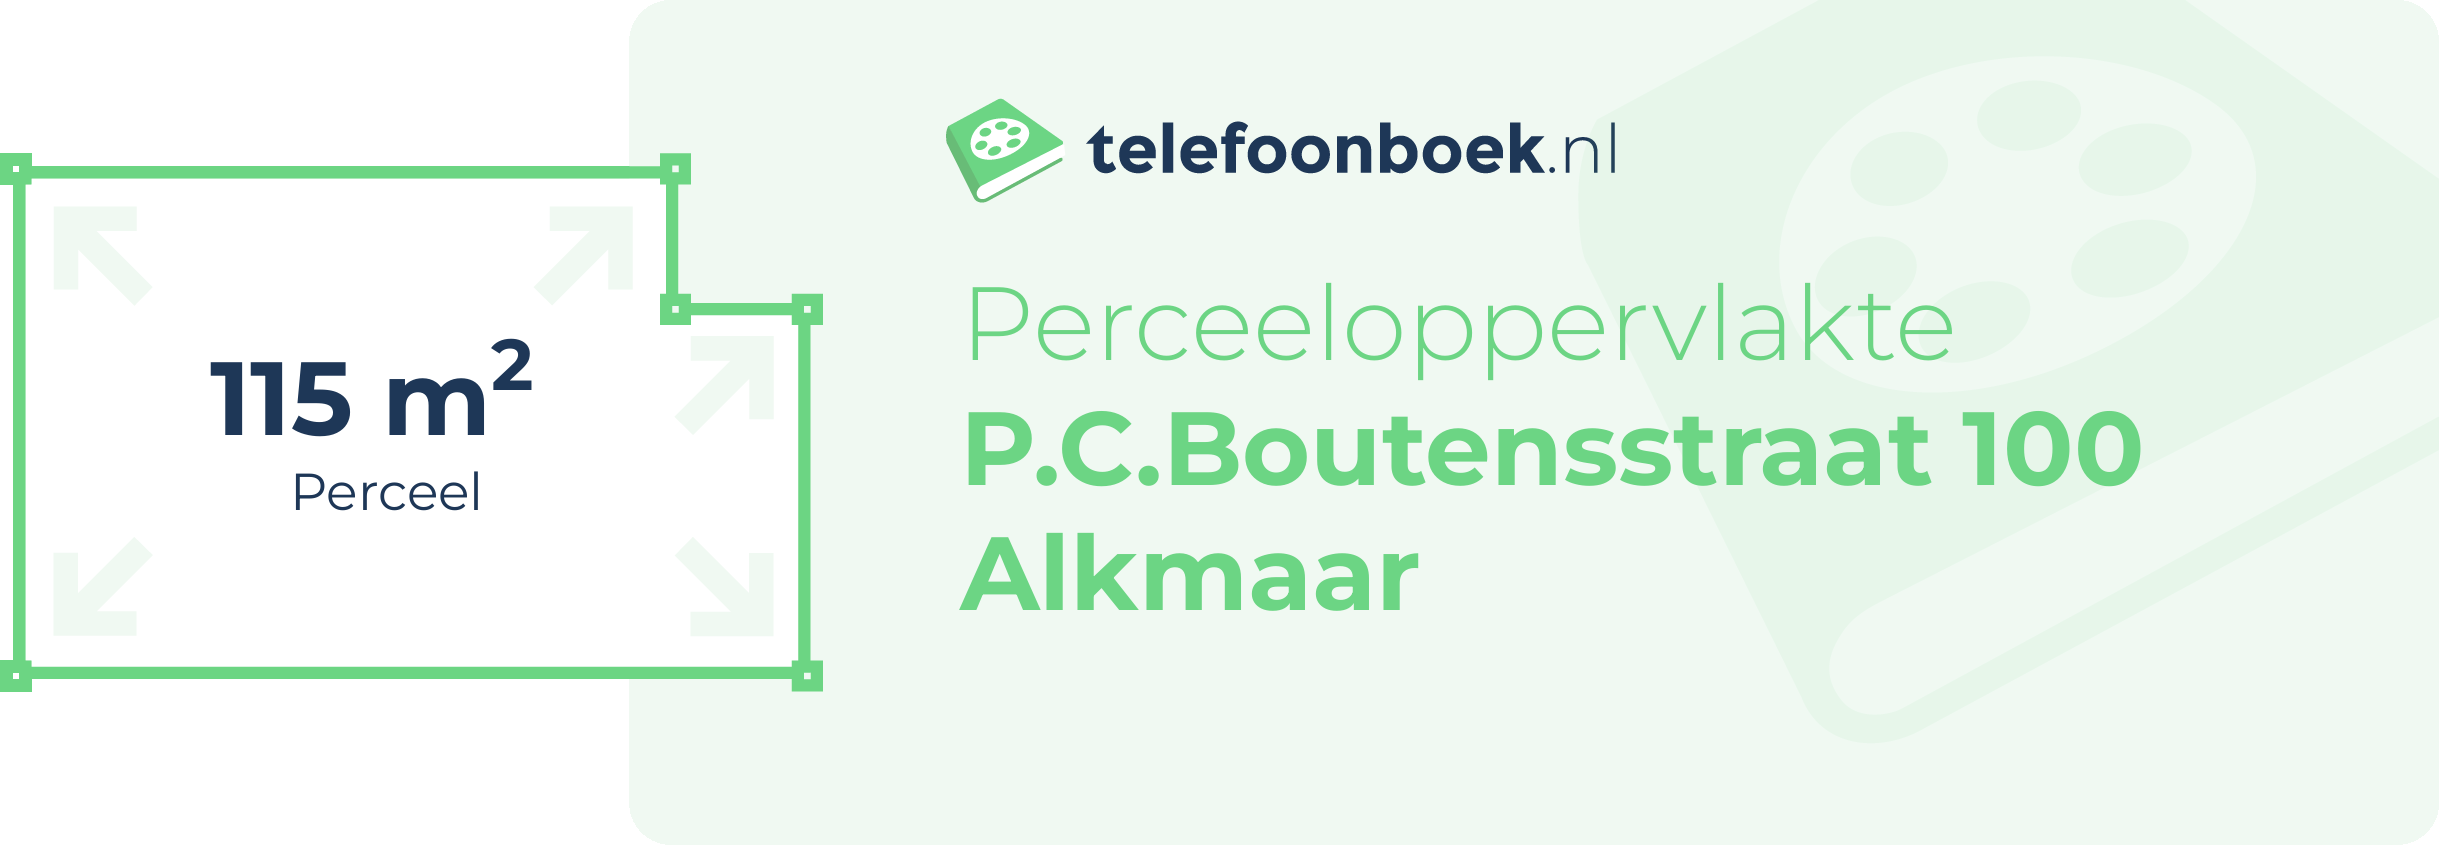 Perceeloppervlakte P.C.Boutensstraat 100 Alkmaar